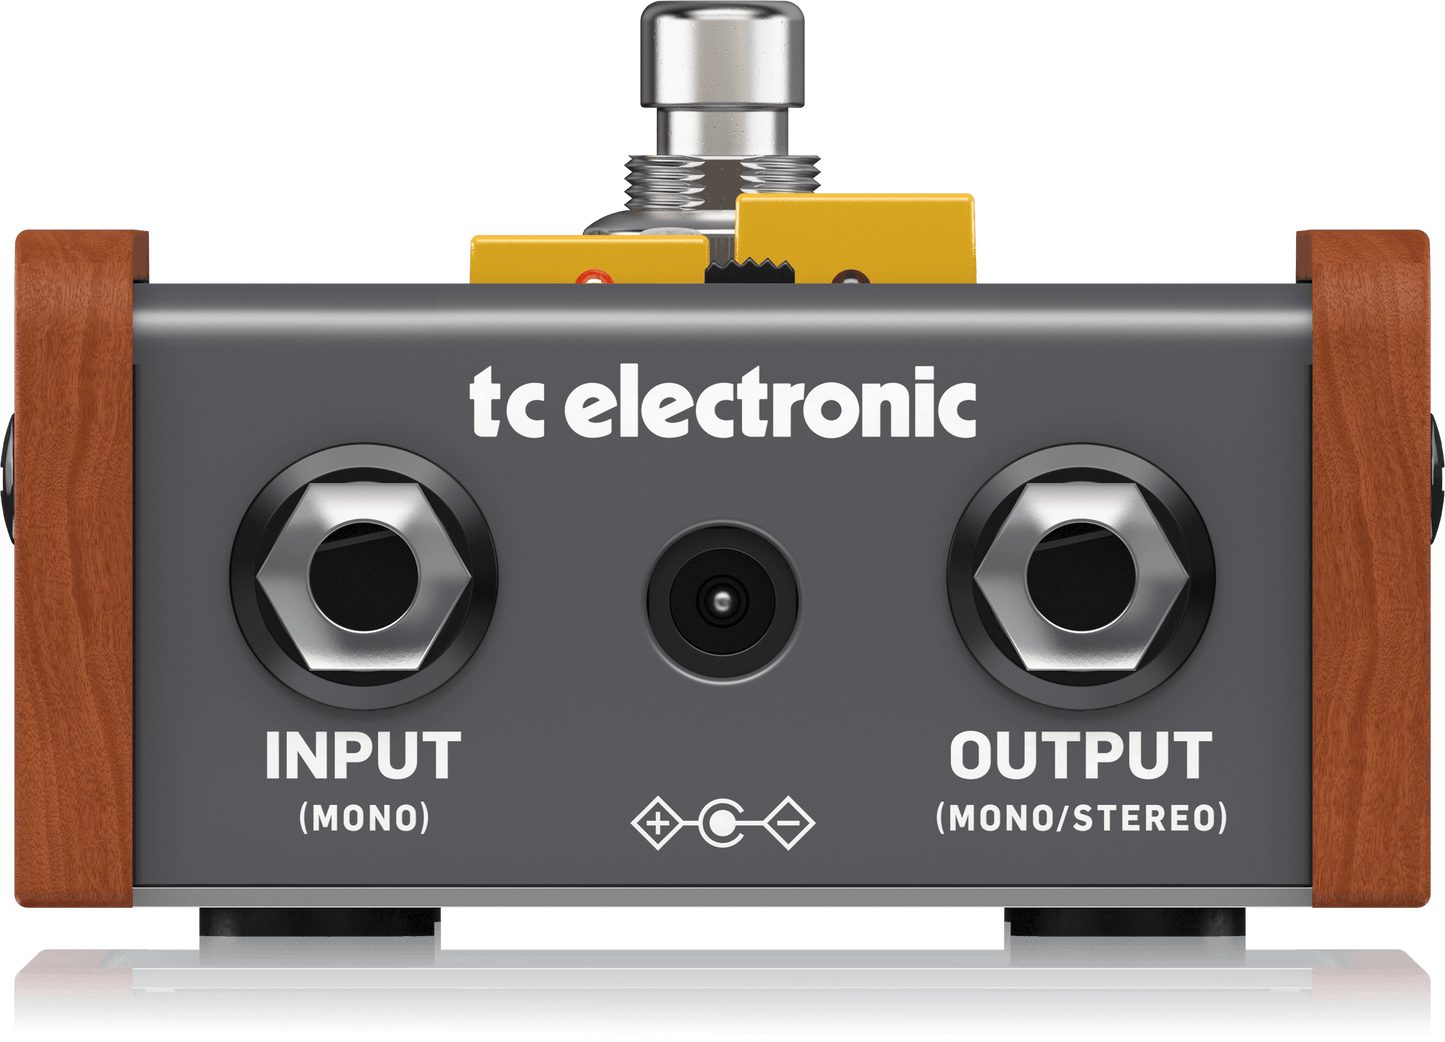 TC Electronic June-60v2 Vintage-Analog Chorus Pedal